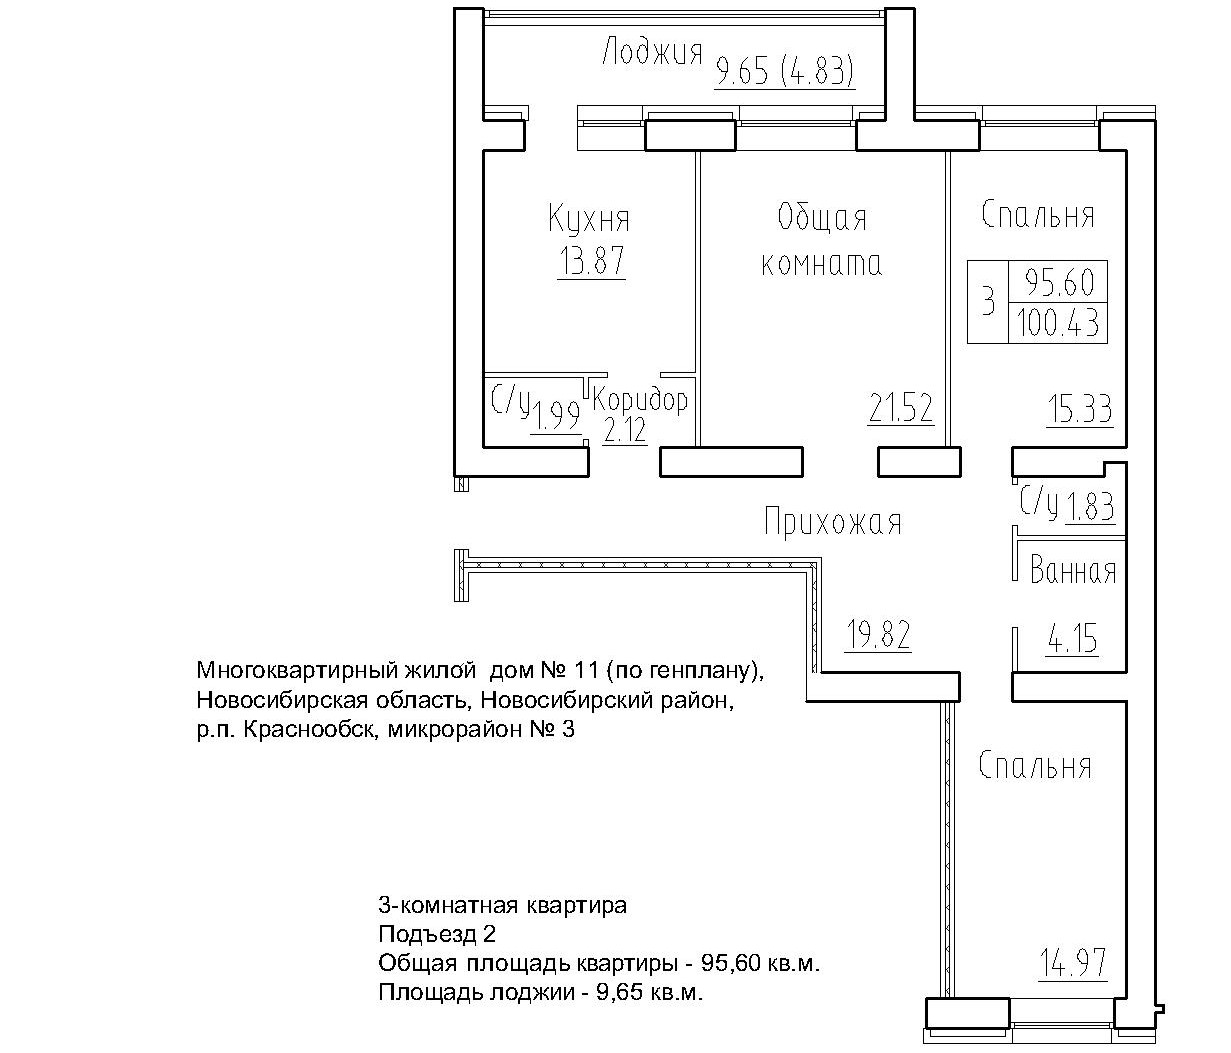 3-комнатная квартира 105.5м2 ЖК Кольца